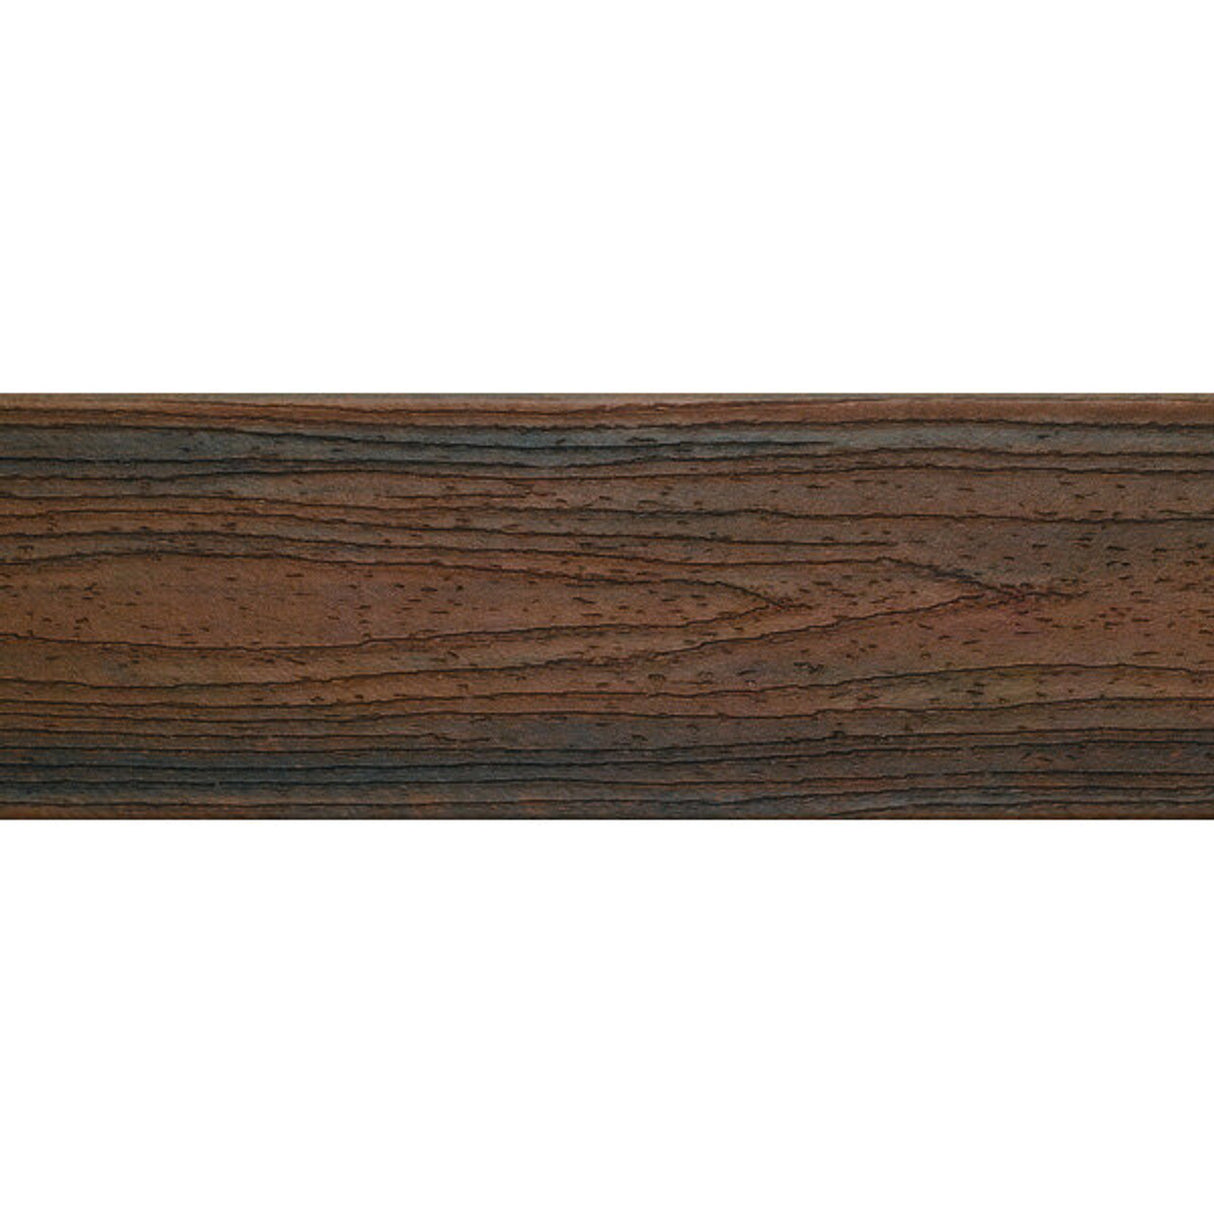 Trex Decking Board Composite Solid 25mmx140mm Spiced Rum 3660mm